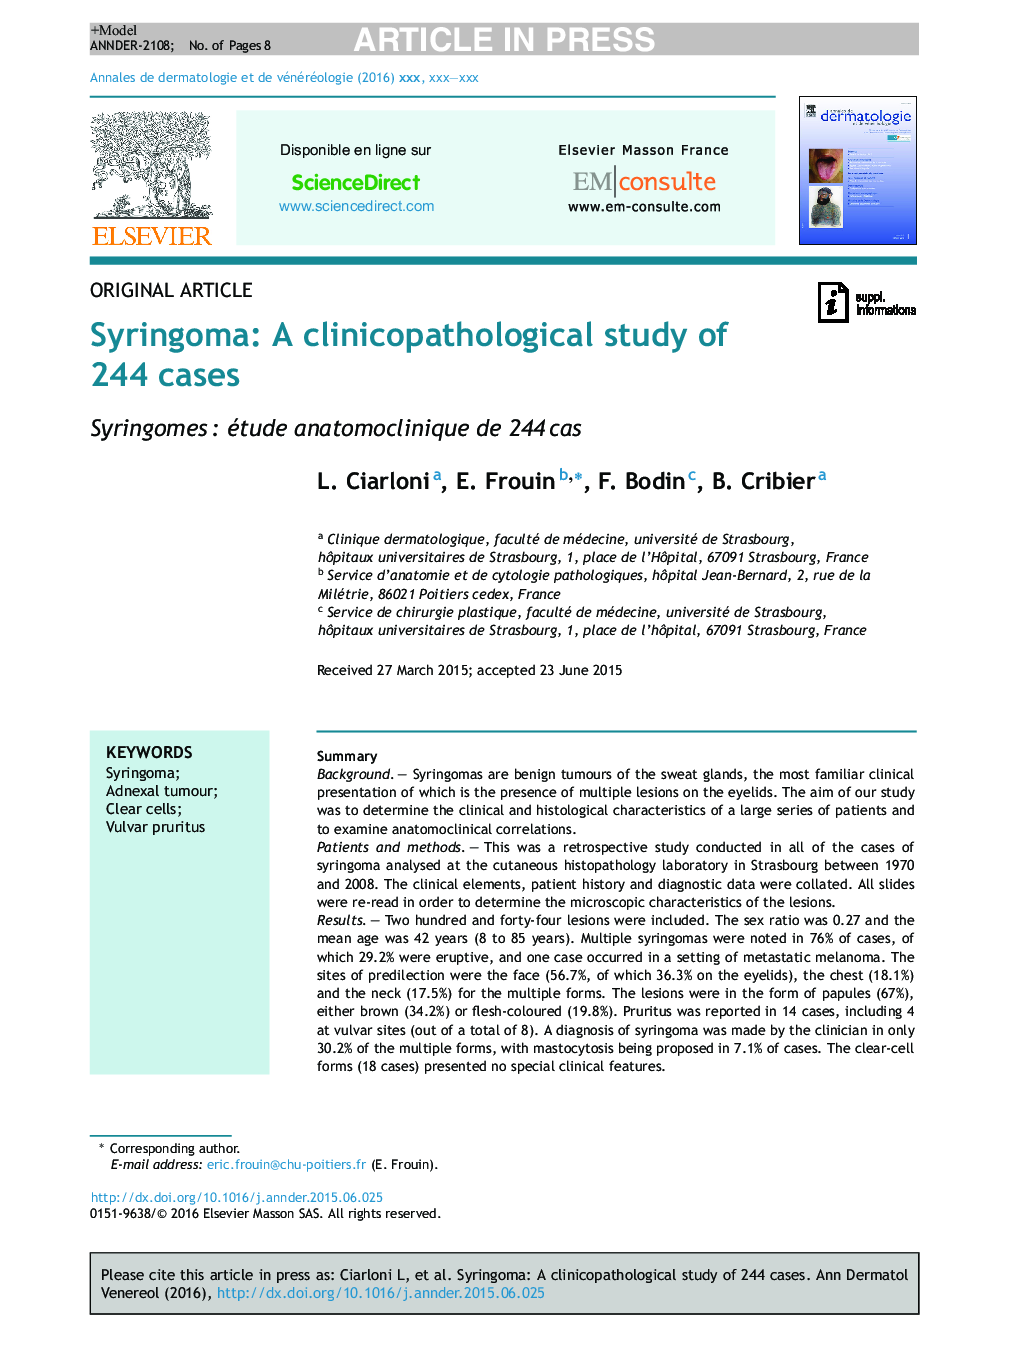 Syringoma: A clinicopathological study of 244 cases